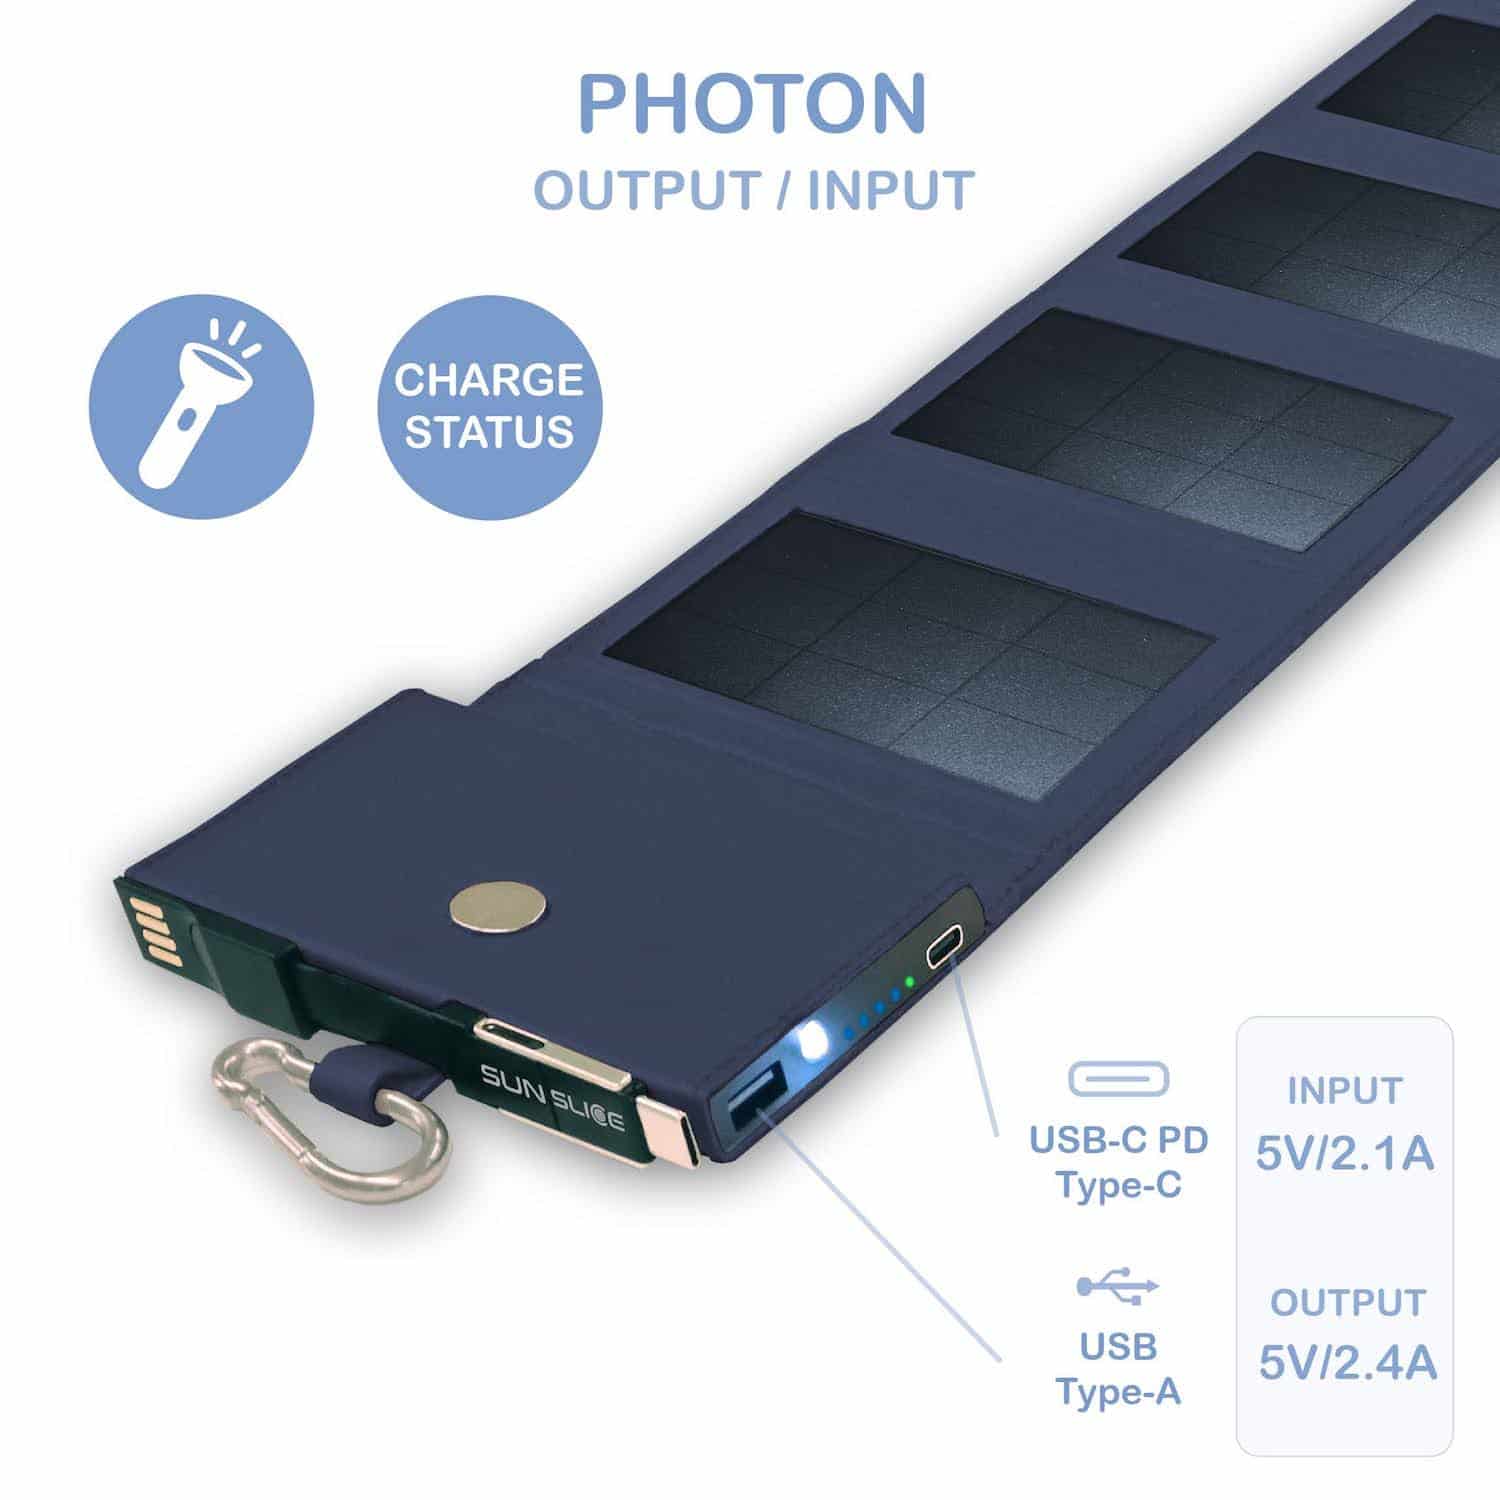 photon beste zonne-energiebank op witte achtergrond met enkele functies